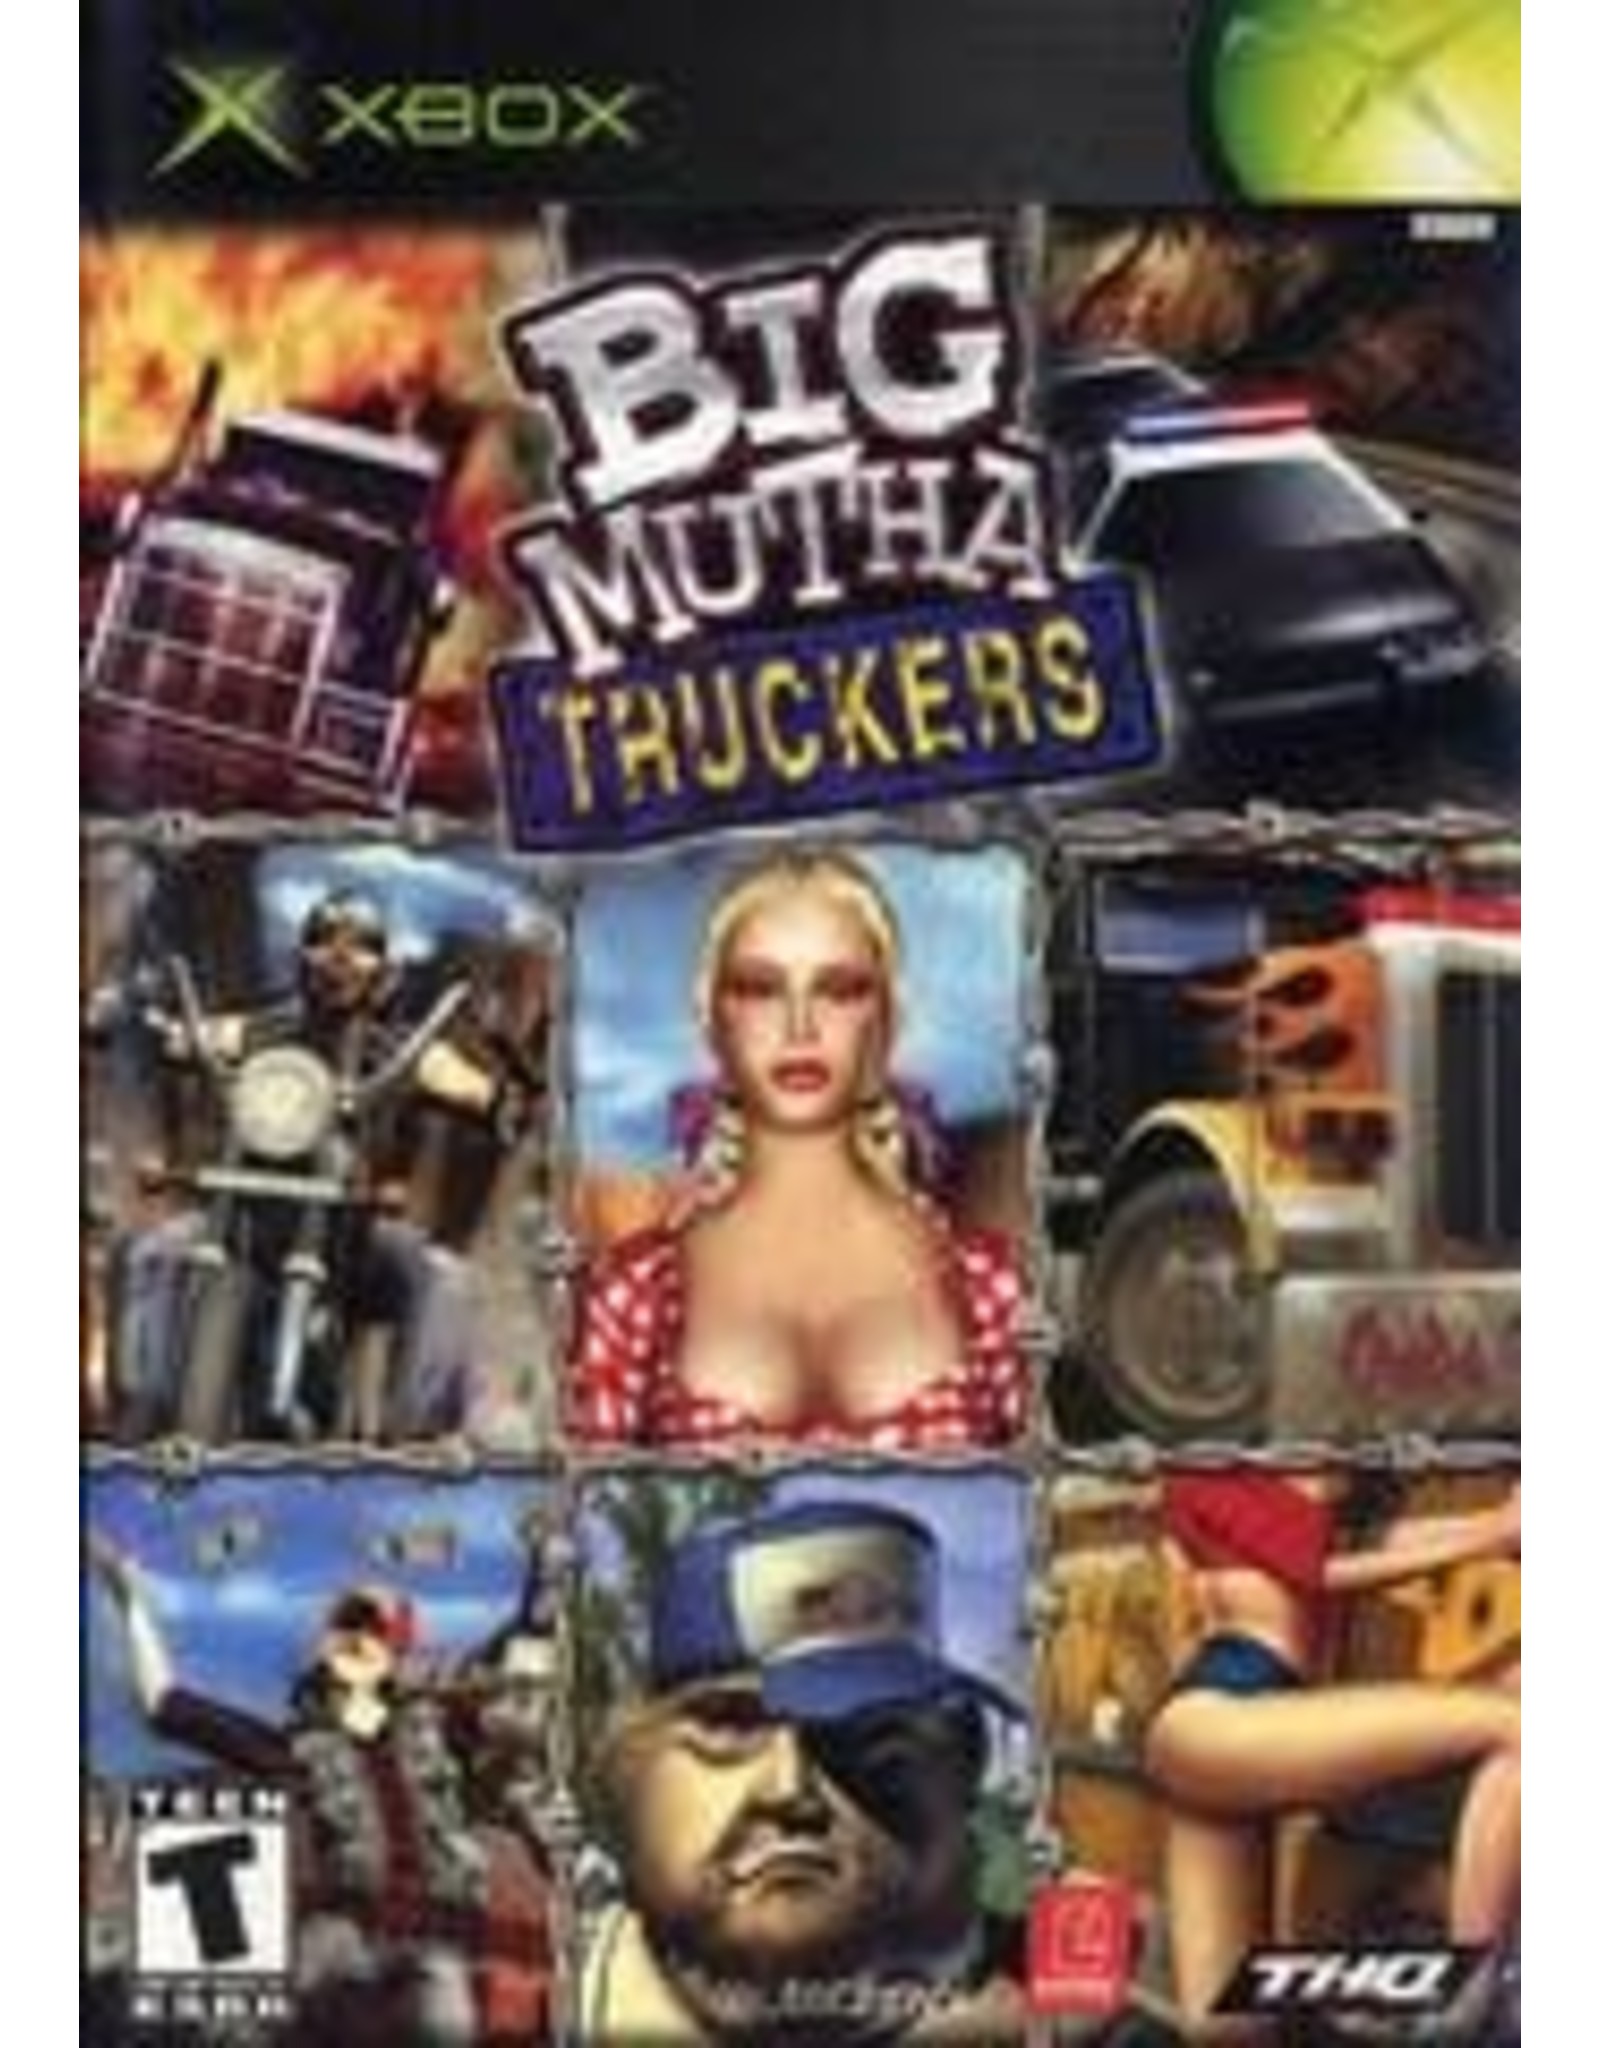 Xbox Big Mutha Truckers (No Manual)